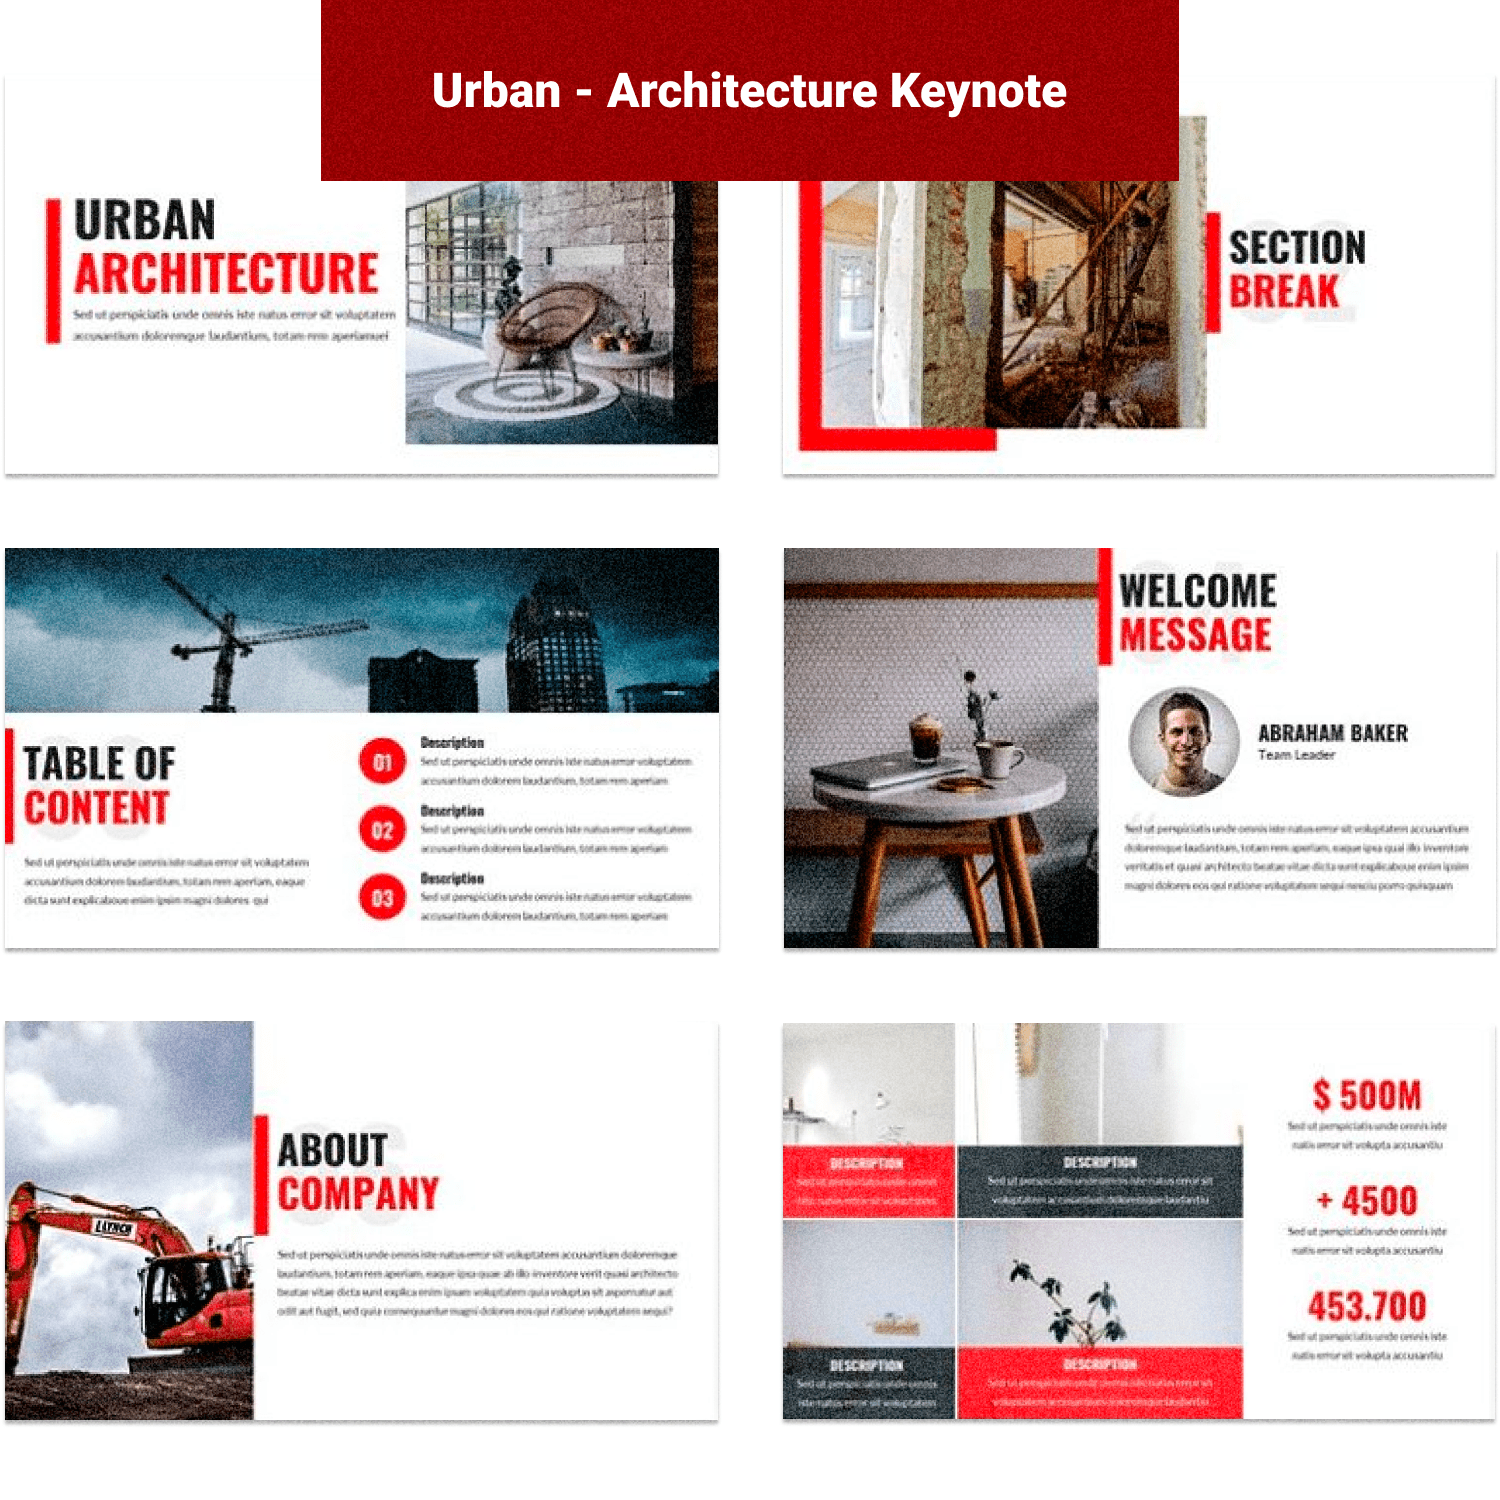 Urban - Architecture Keynote.